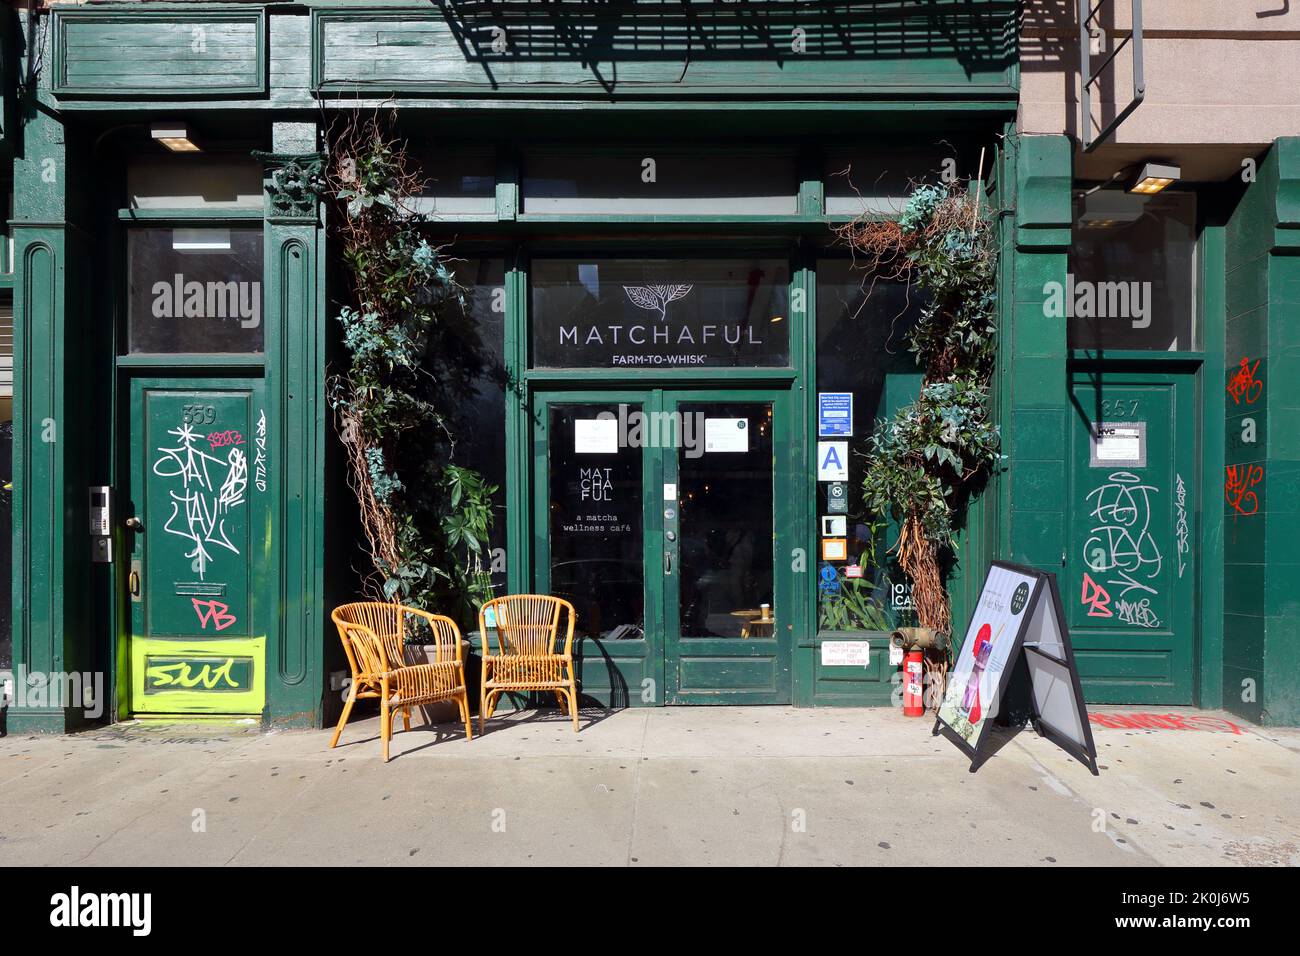 Matchaful, 359 Canal St, New York, NYC storefront photo of a vegan matcha cafe in Manhattan's Tribeca neighborhood. Stock Photo